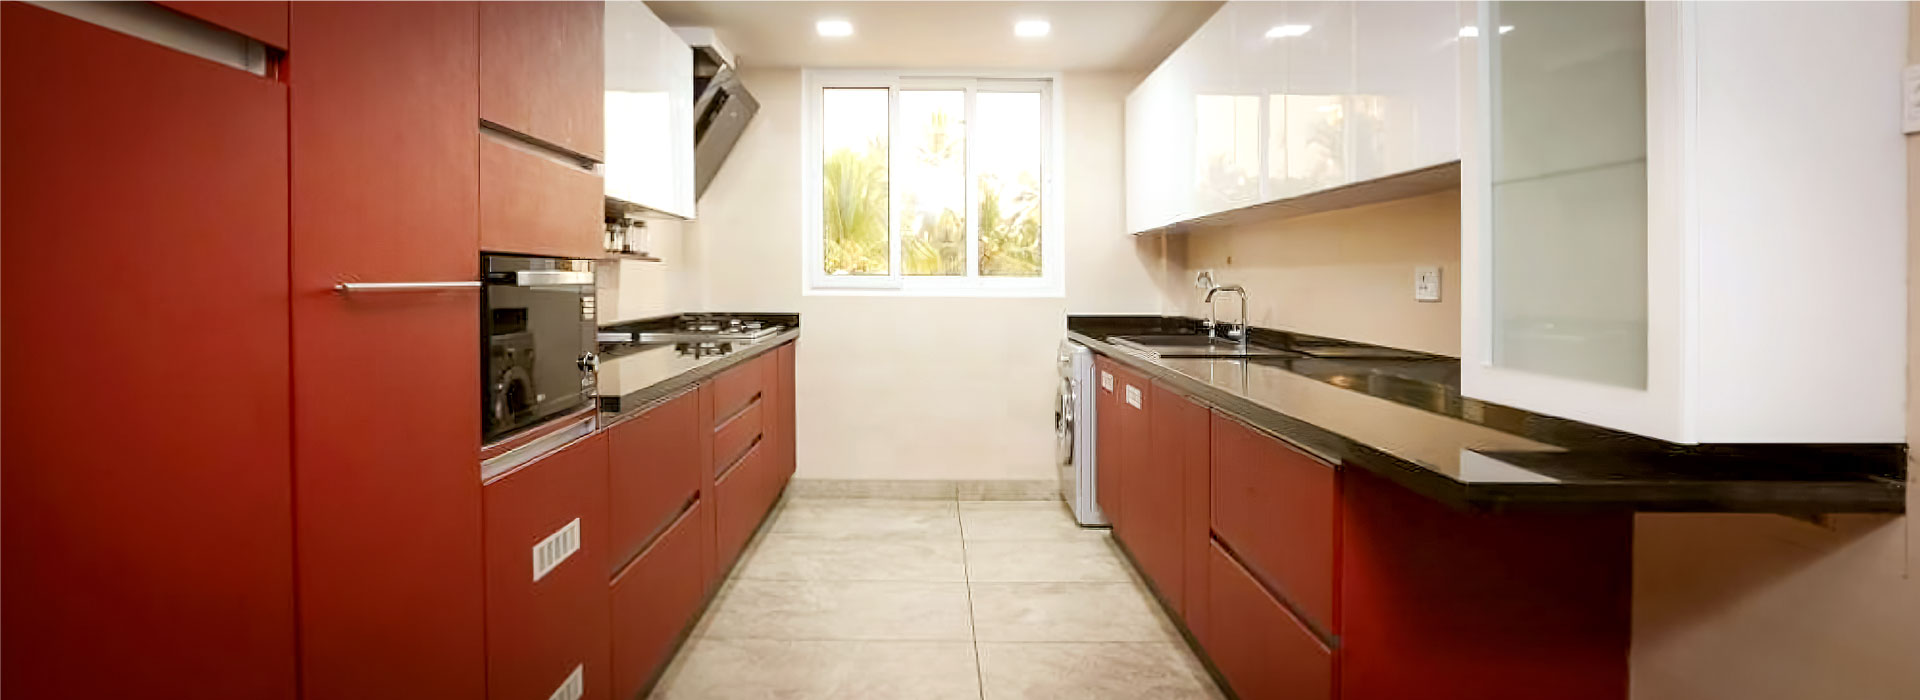 Modular Kitchen Red | Promkraft Interior